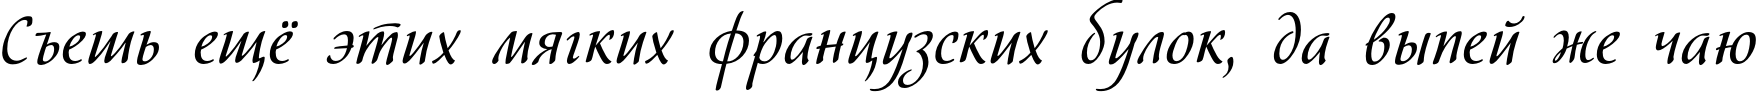 Пример написания шрифтом Hortensia текста на русском